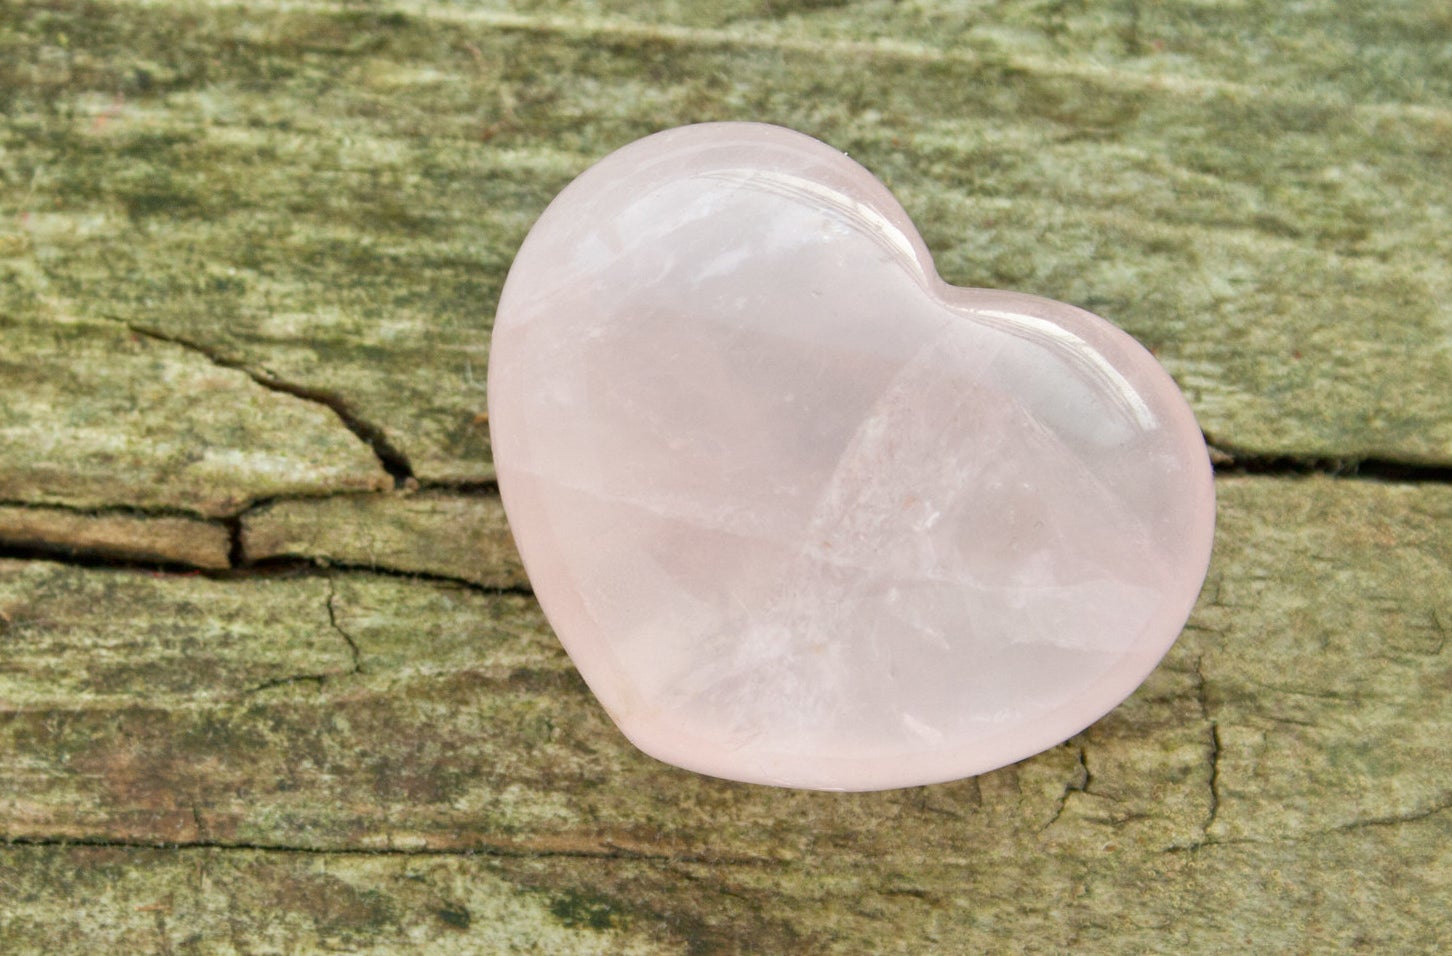 rose quartz heart on wooden ground